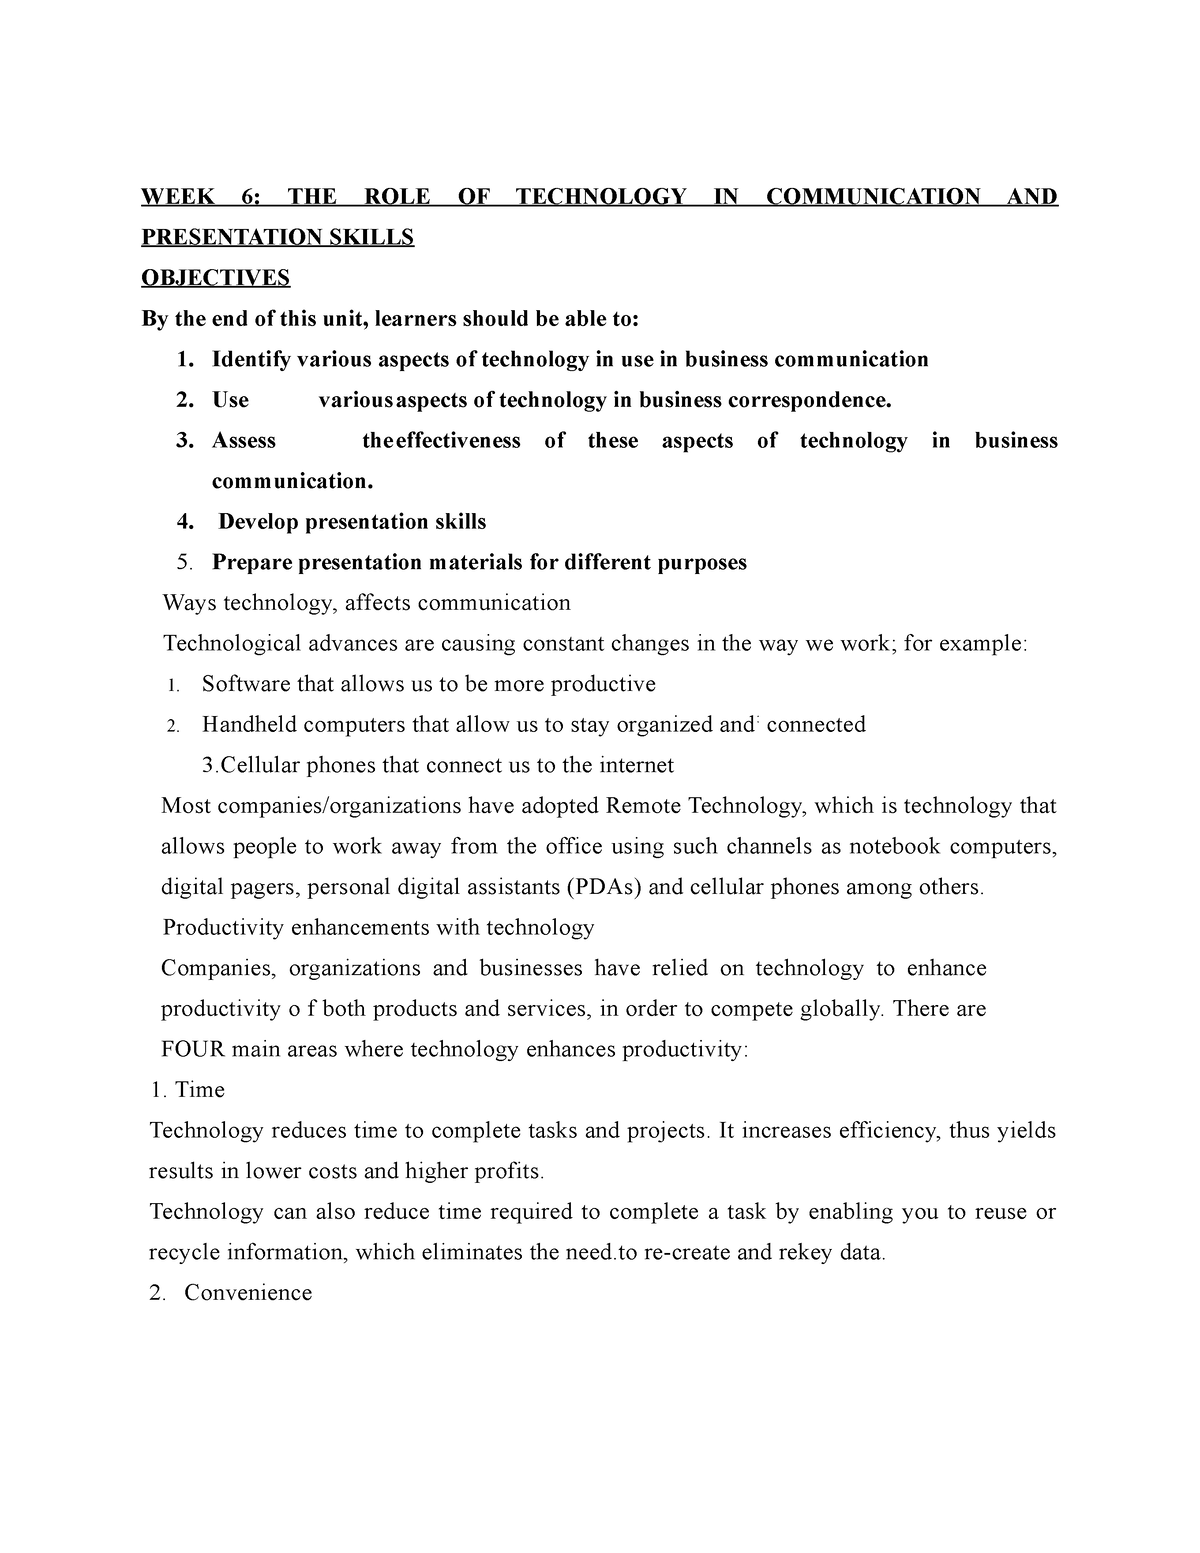 assignment #4 (week 6) global communication paper